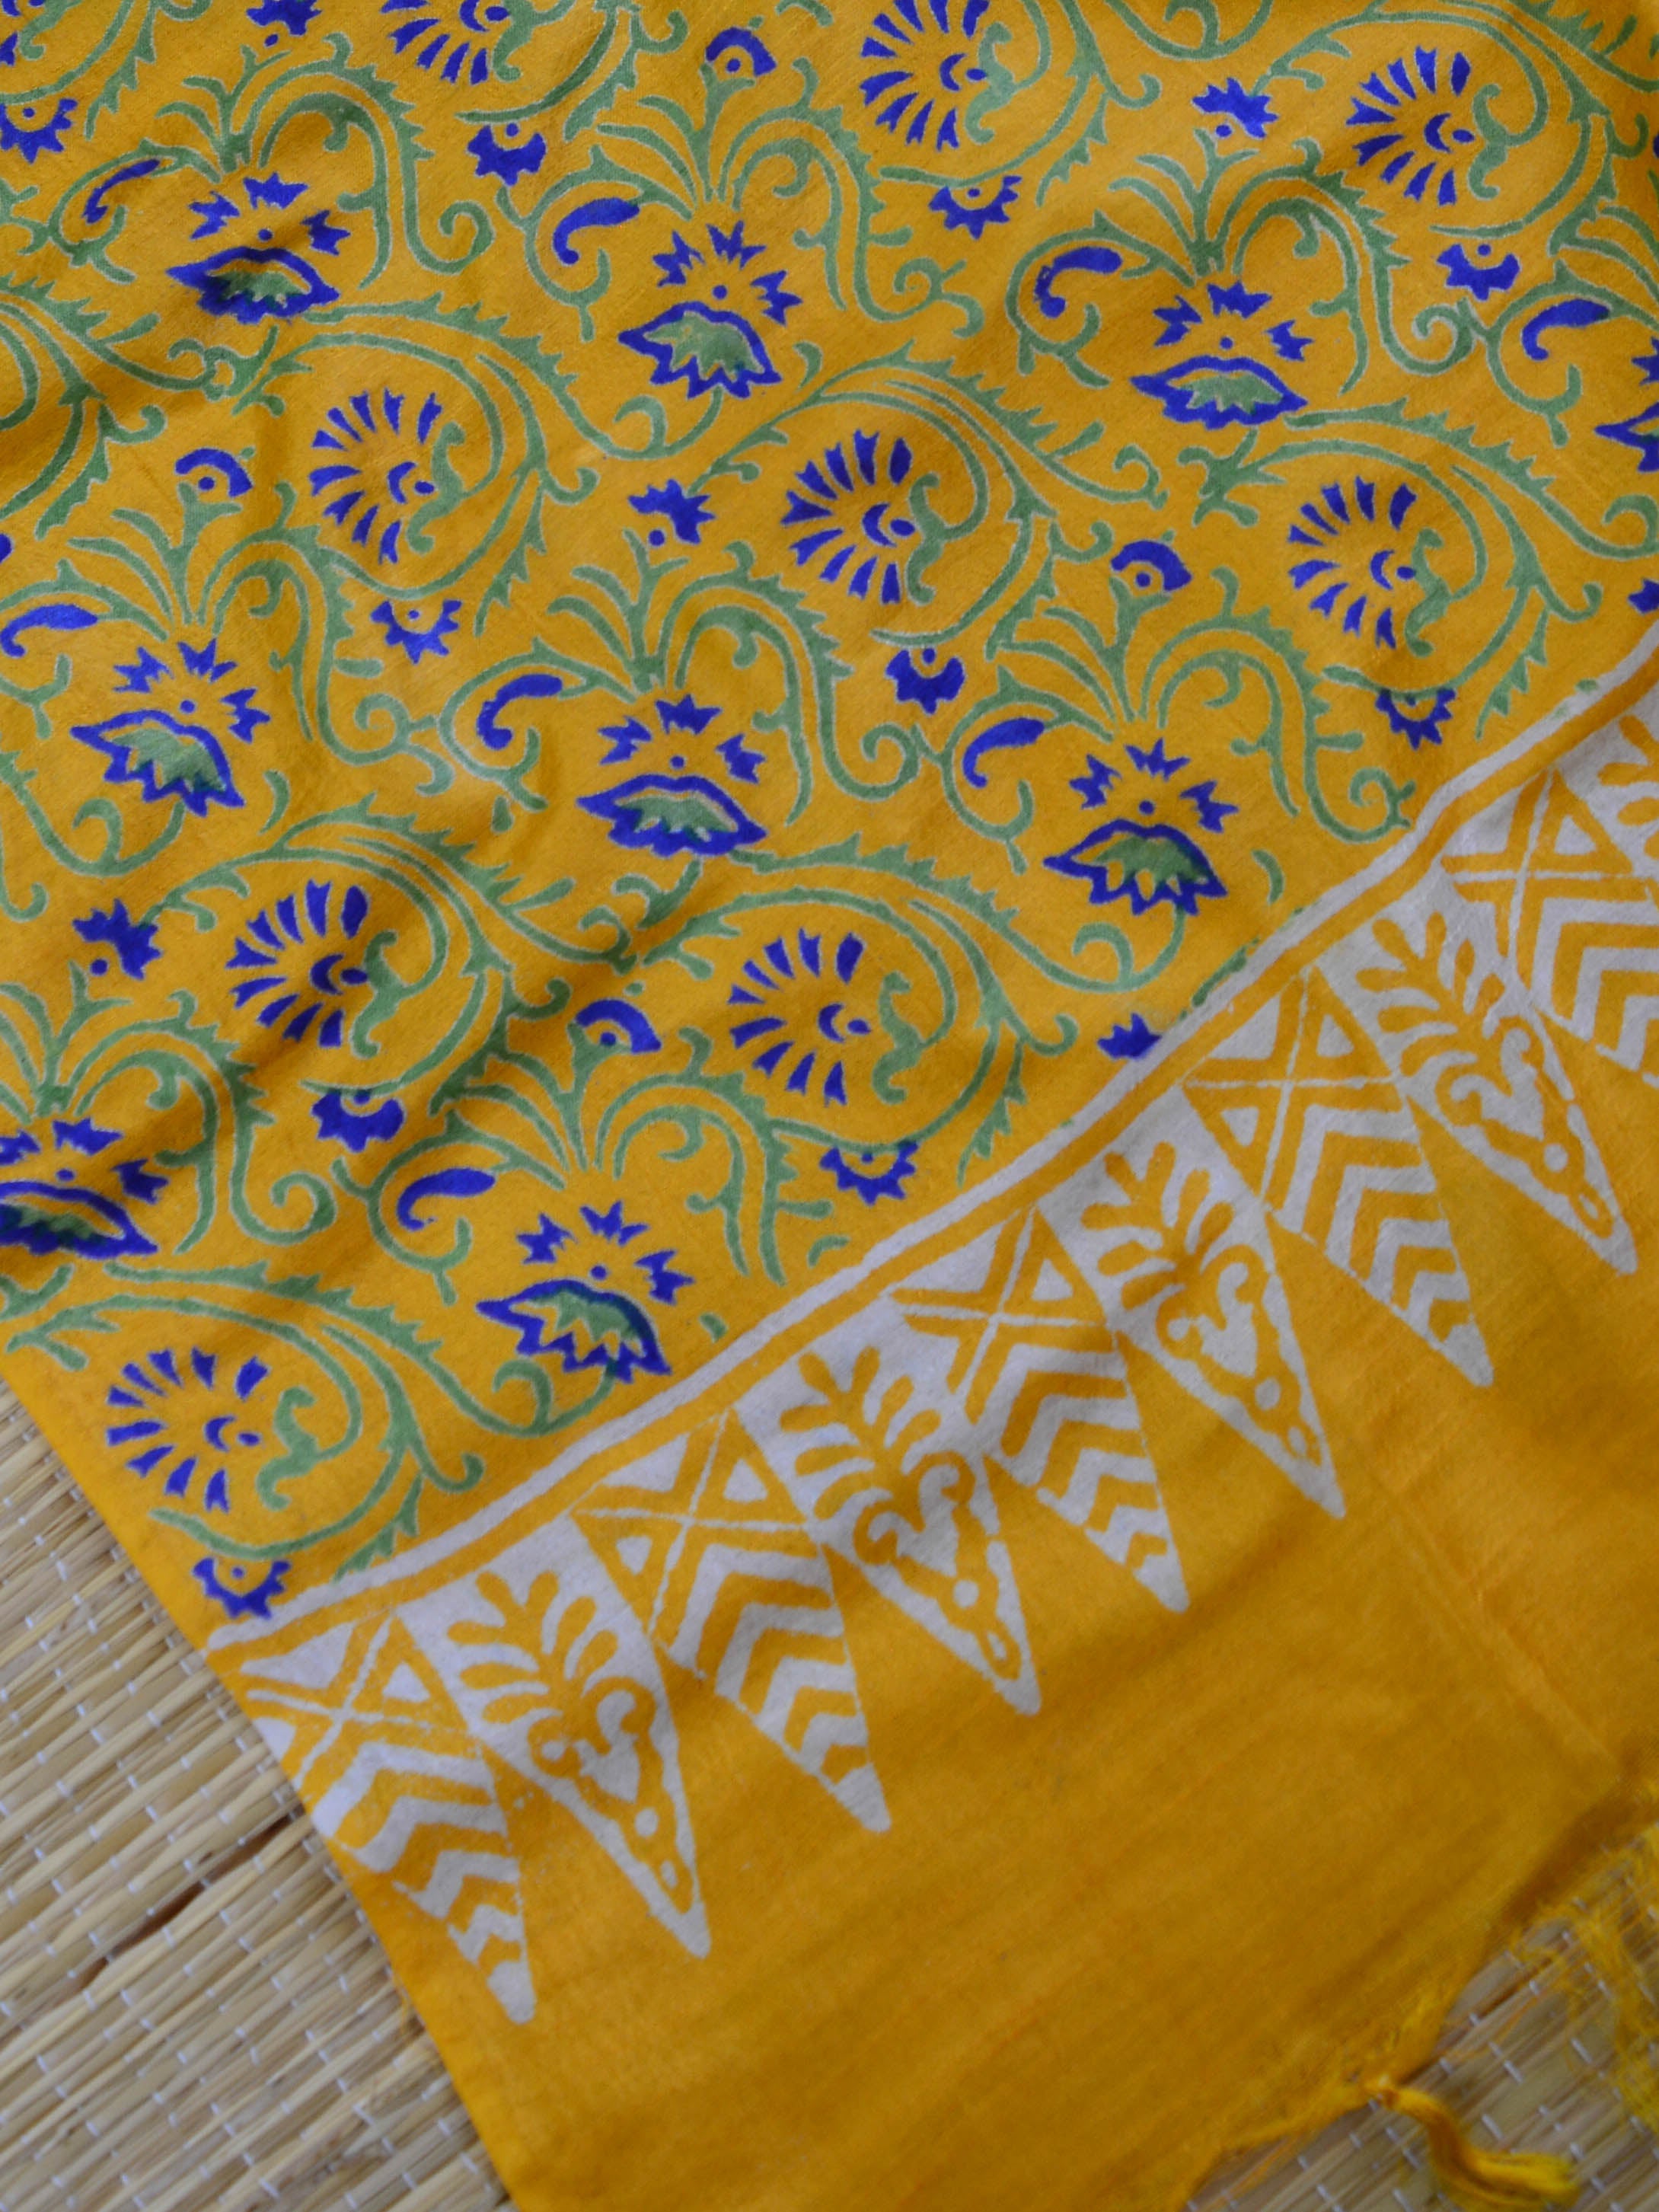 Bhagalpuri Salwar Kameez Glossy Cotton Silk Hand-Block Printed Fabric-Yellow & Black